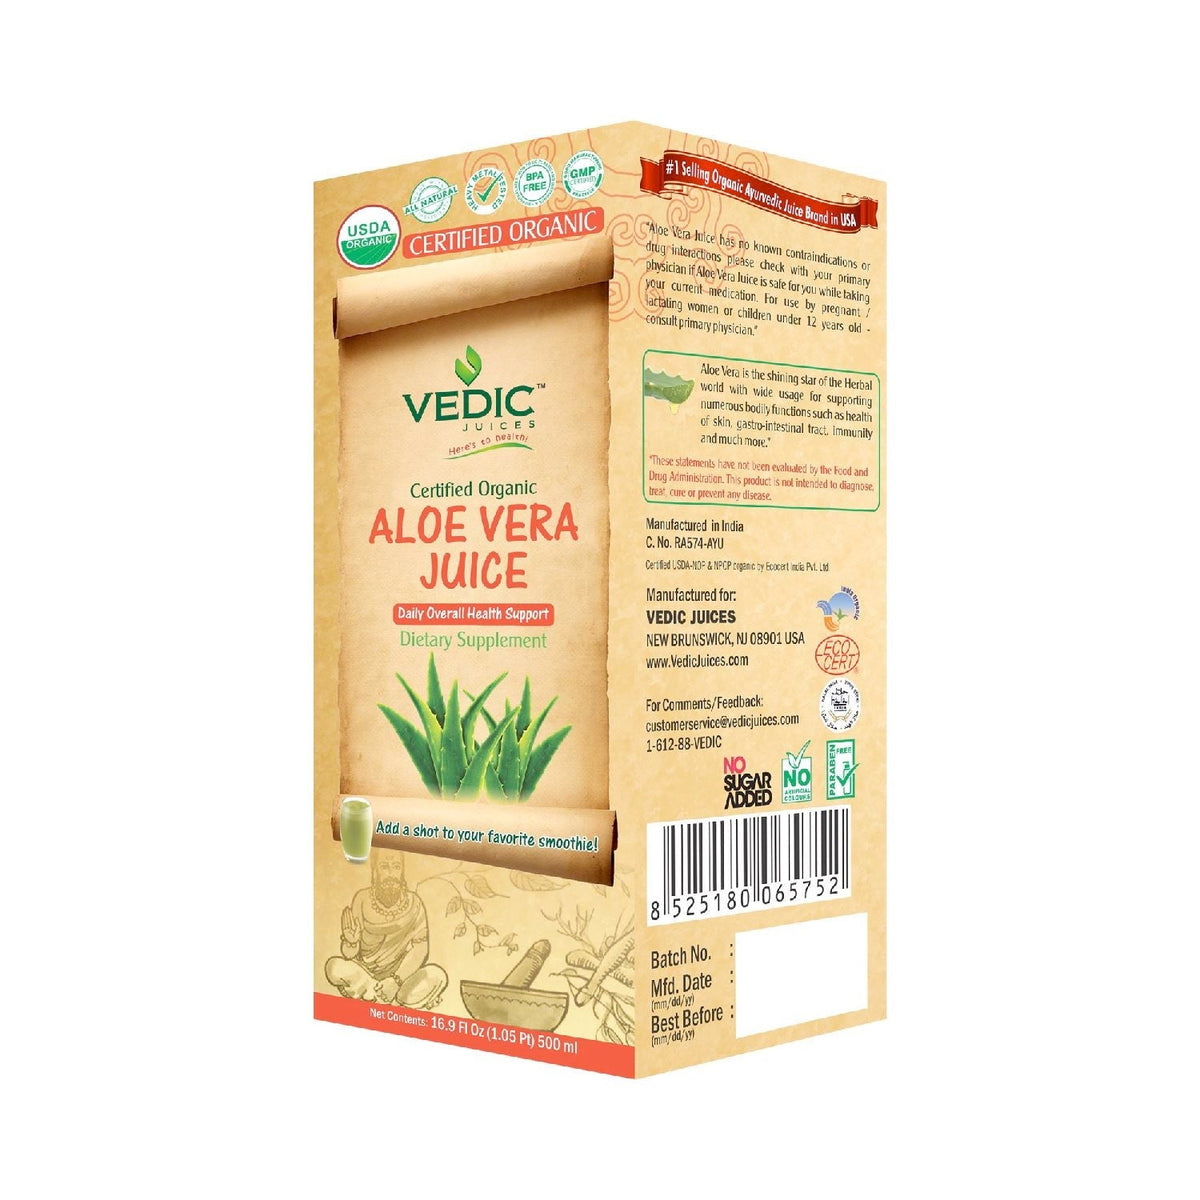 Aloe Vera Juice Storage Information